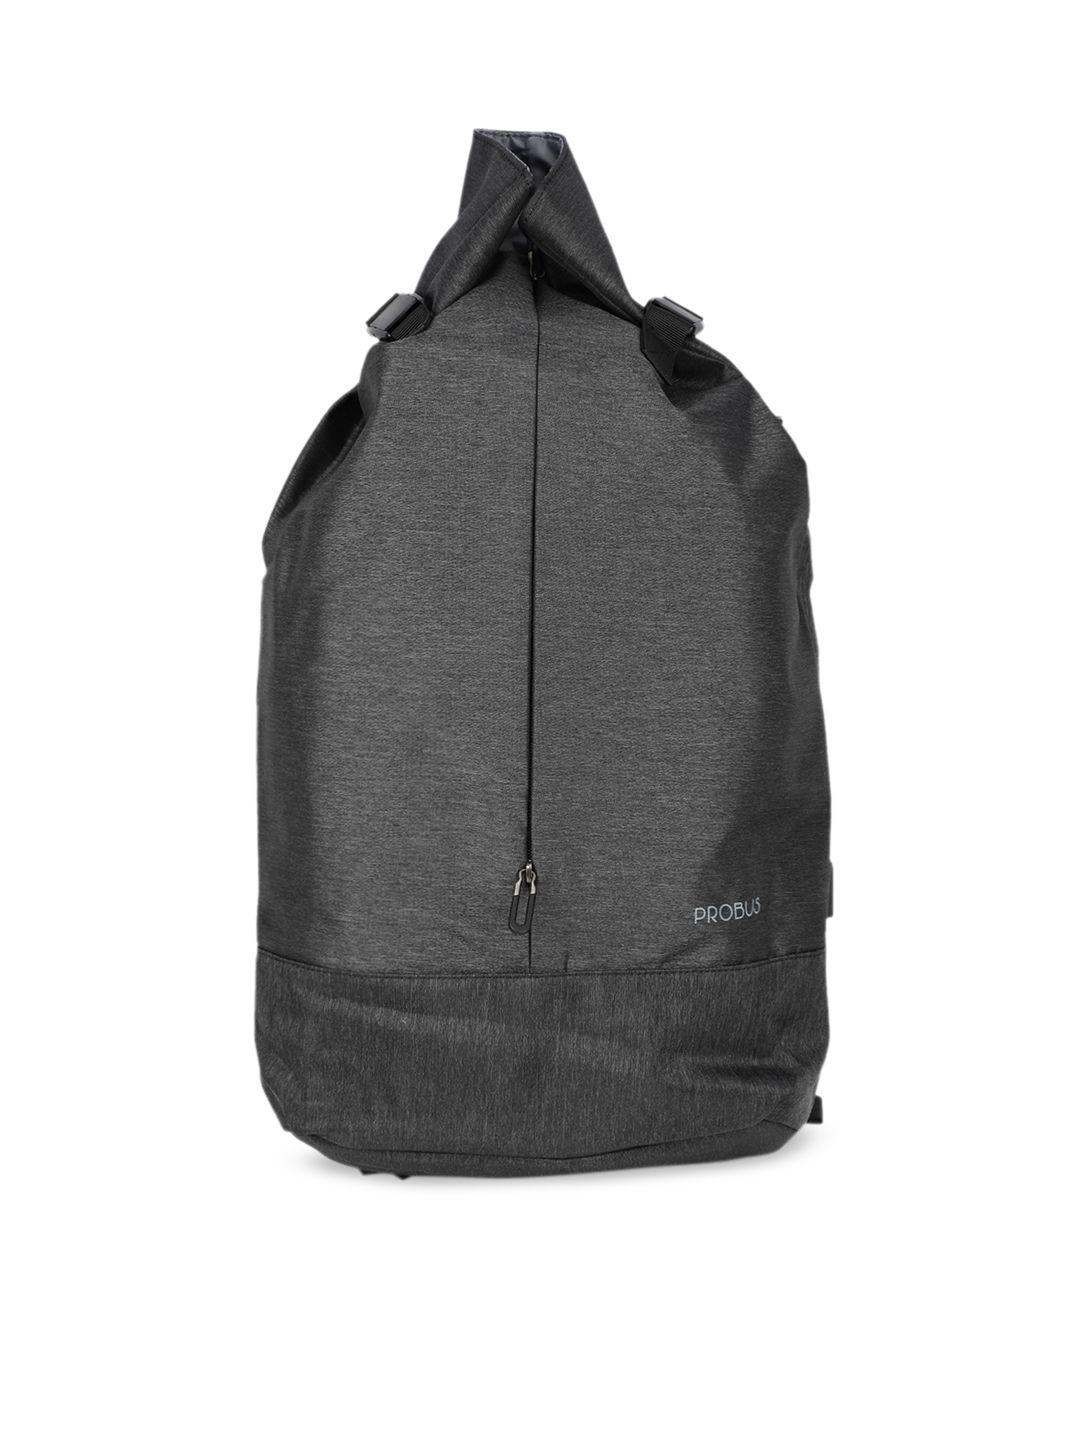 probus unisex grey & black colourblocked 15.6 inches laptop bag